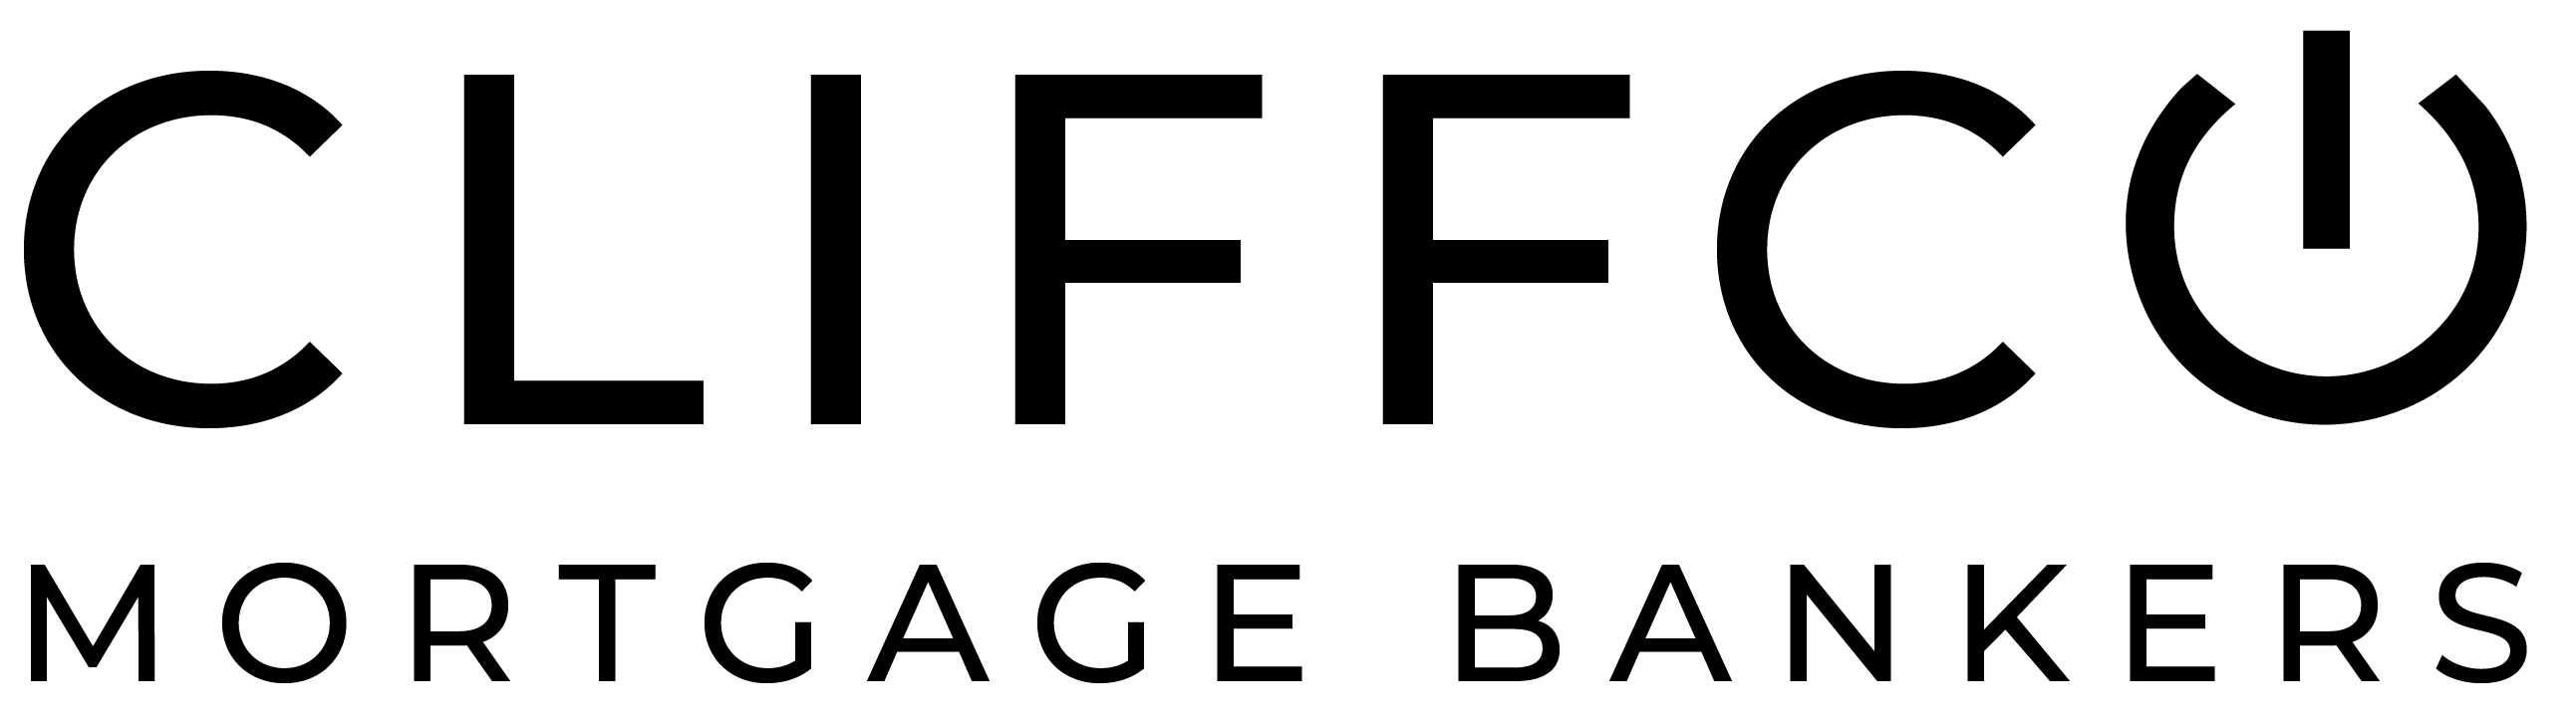 Queeny Duong Logo